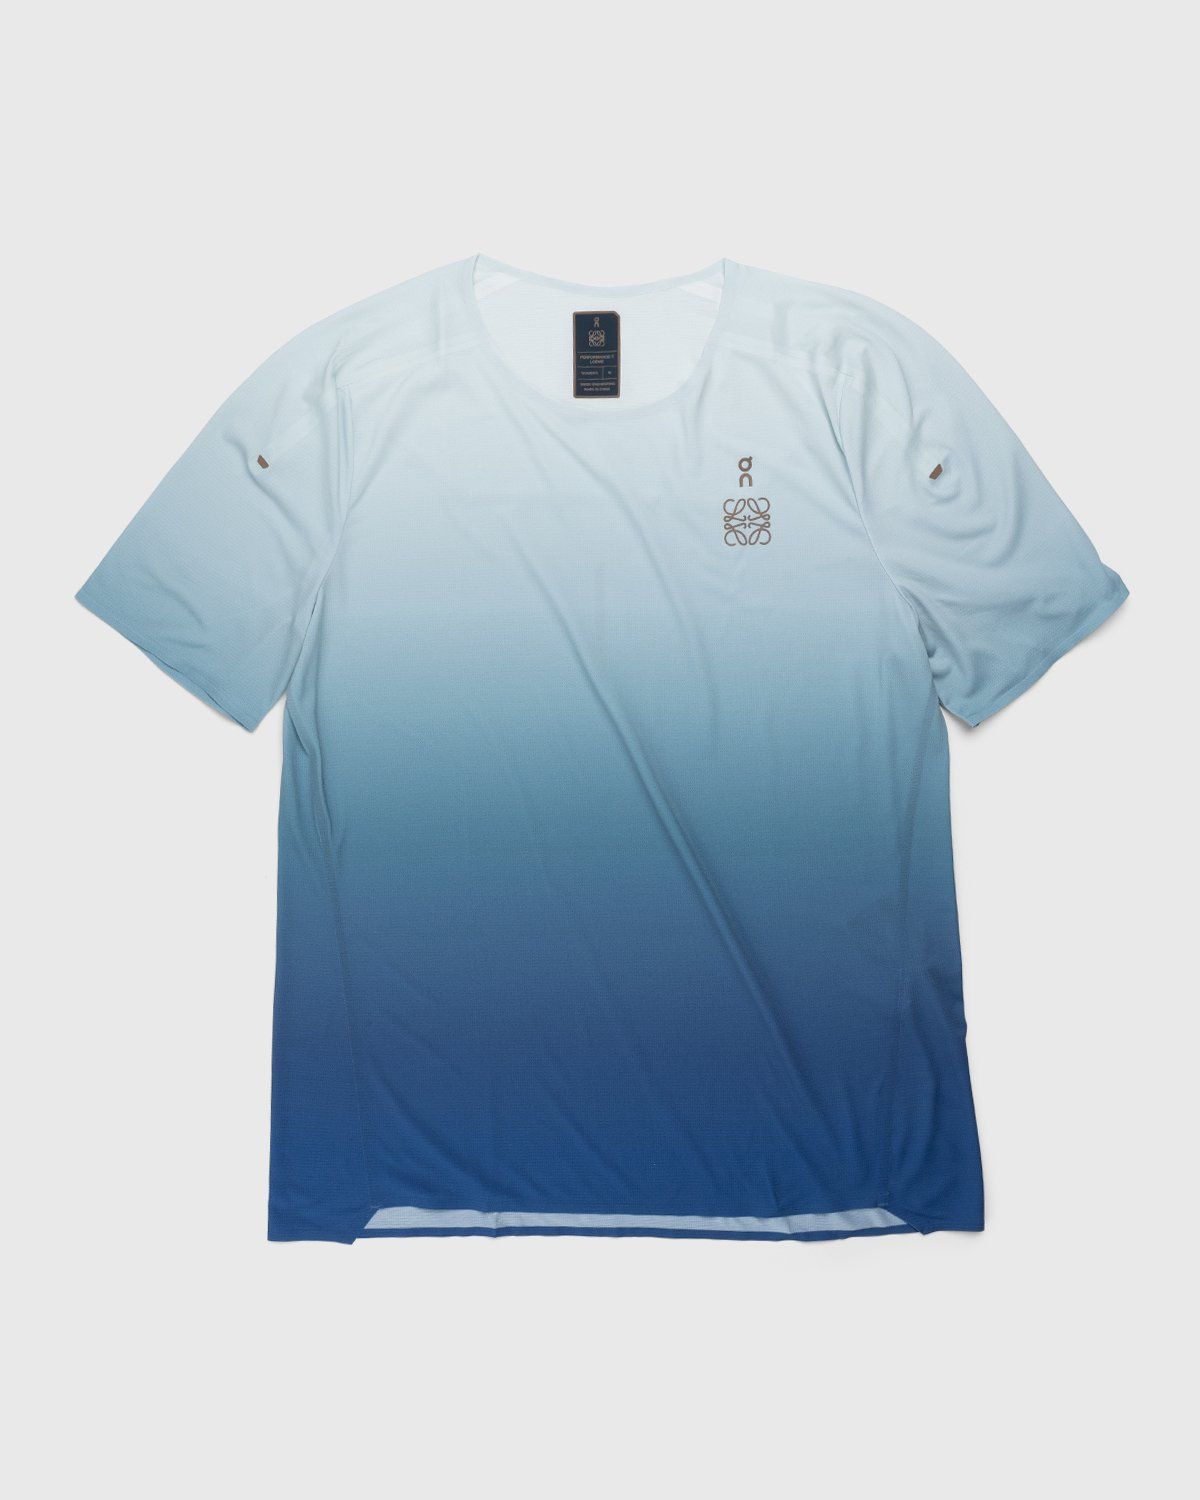 Loewe x On – Women's Performance T-Shirt Gradient Grey - T-Shirts - Blue - Image 1